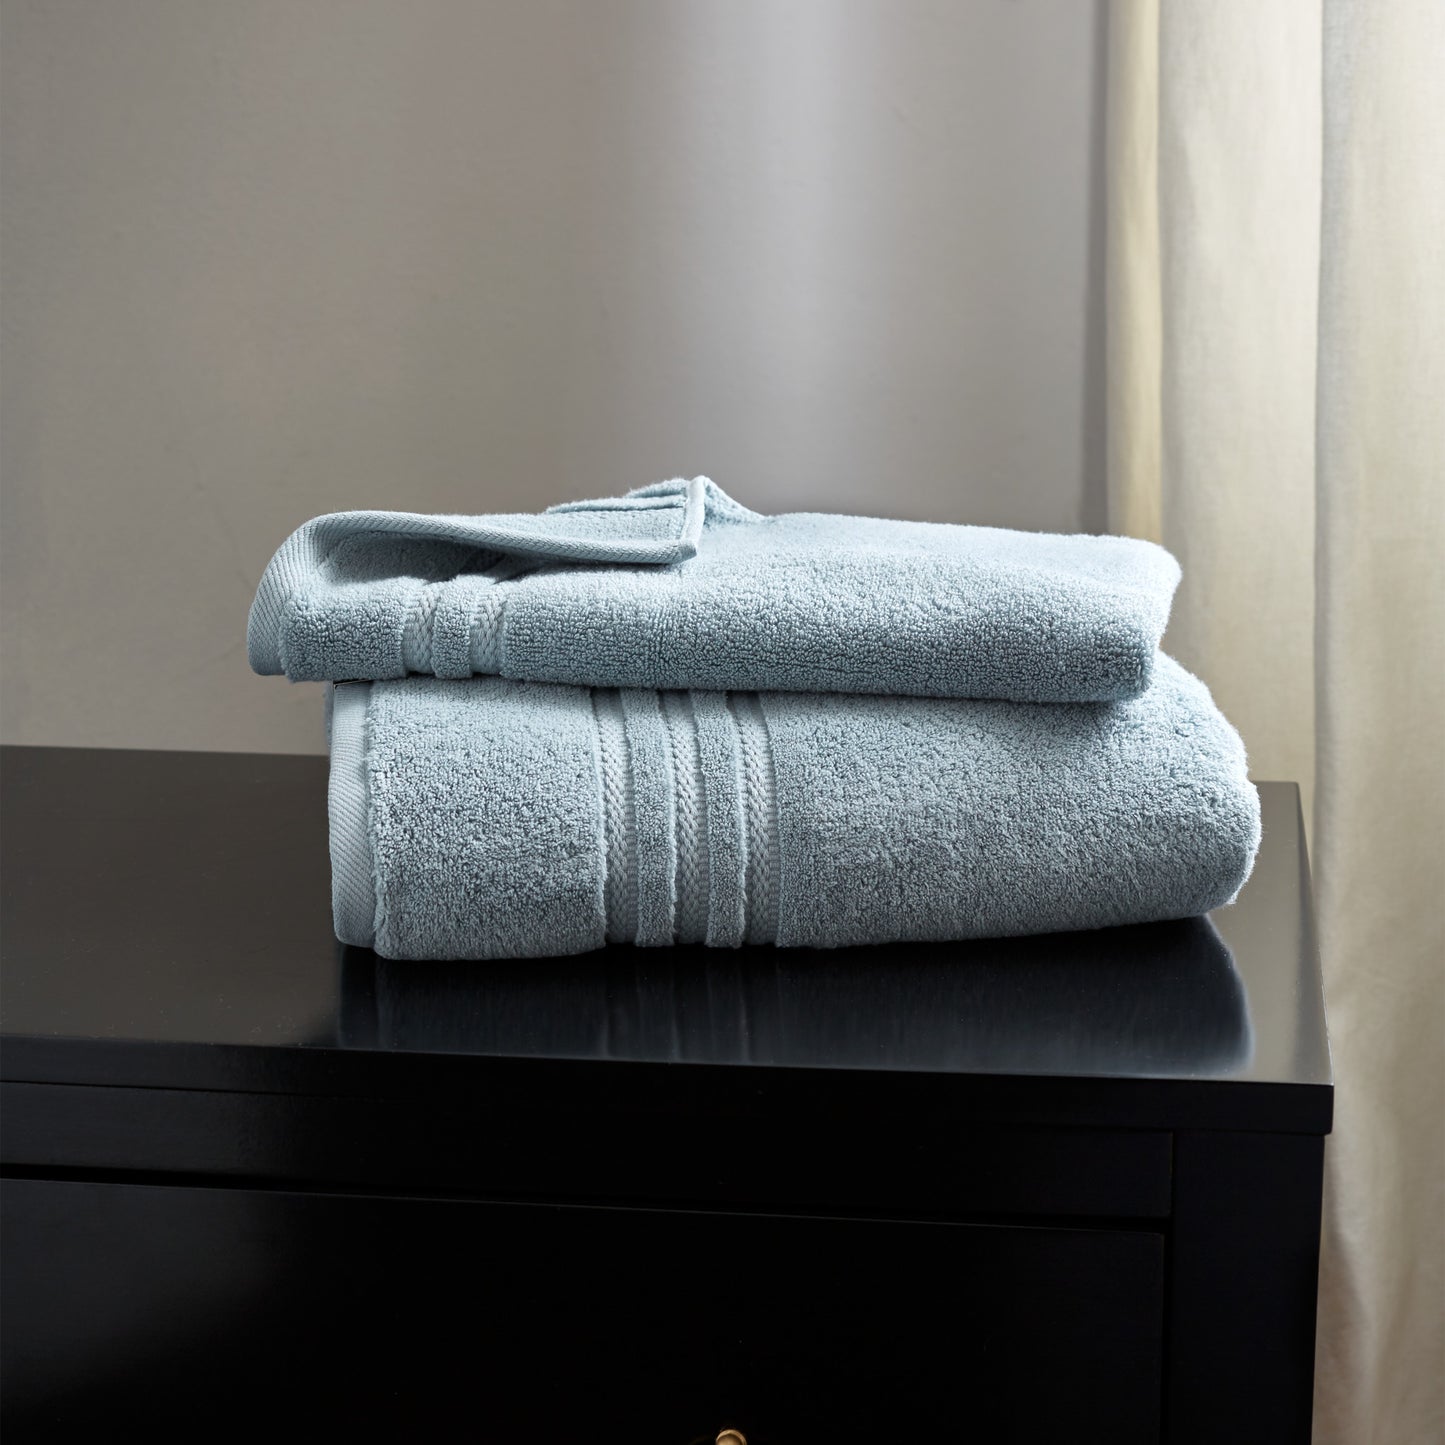 DKNY Brushstroke Ombré Bath Towel